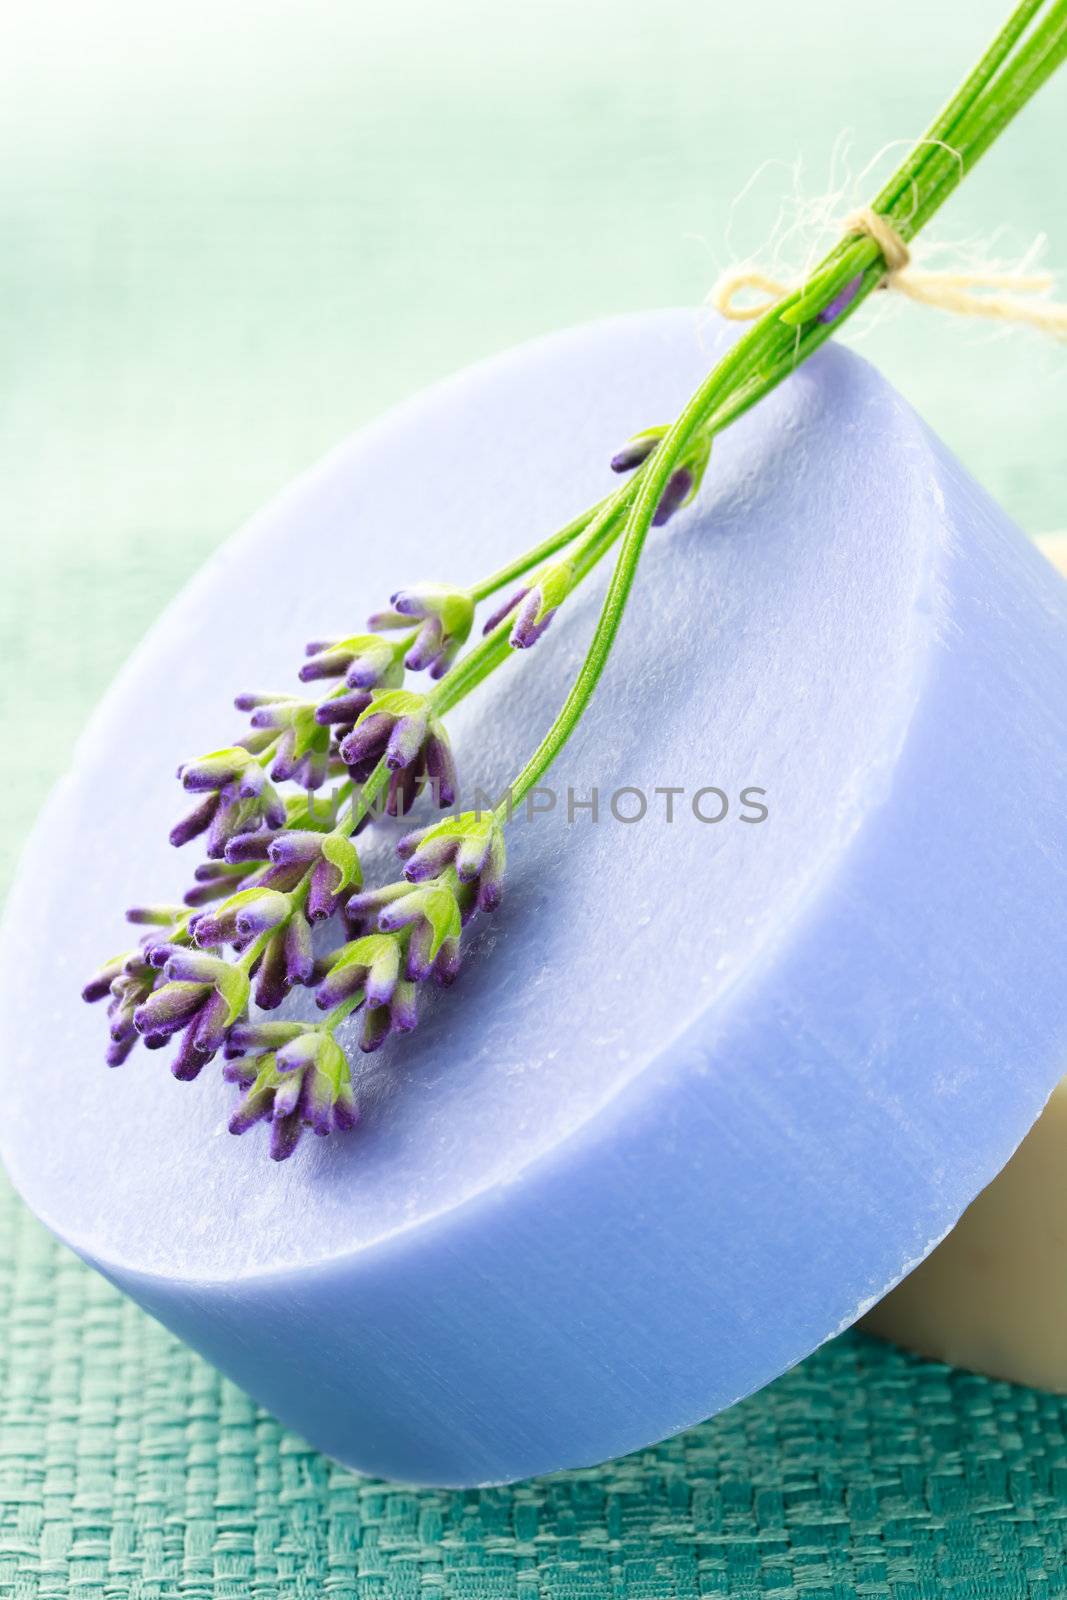 Handmade soap with fresh lavenders by melpomene